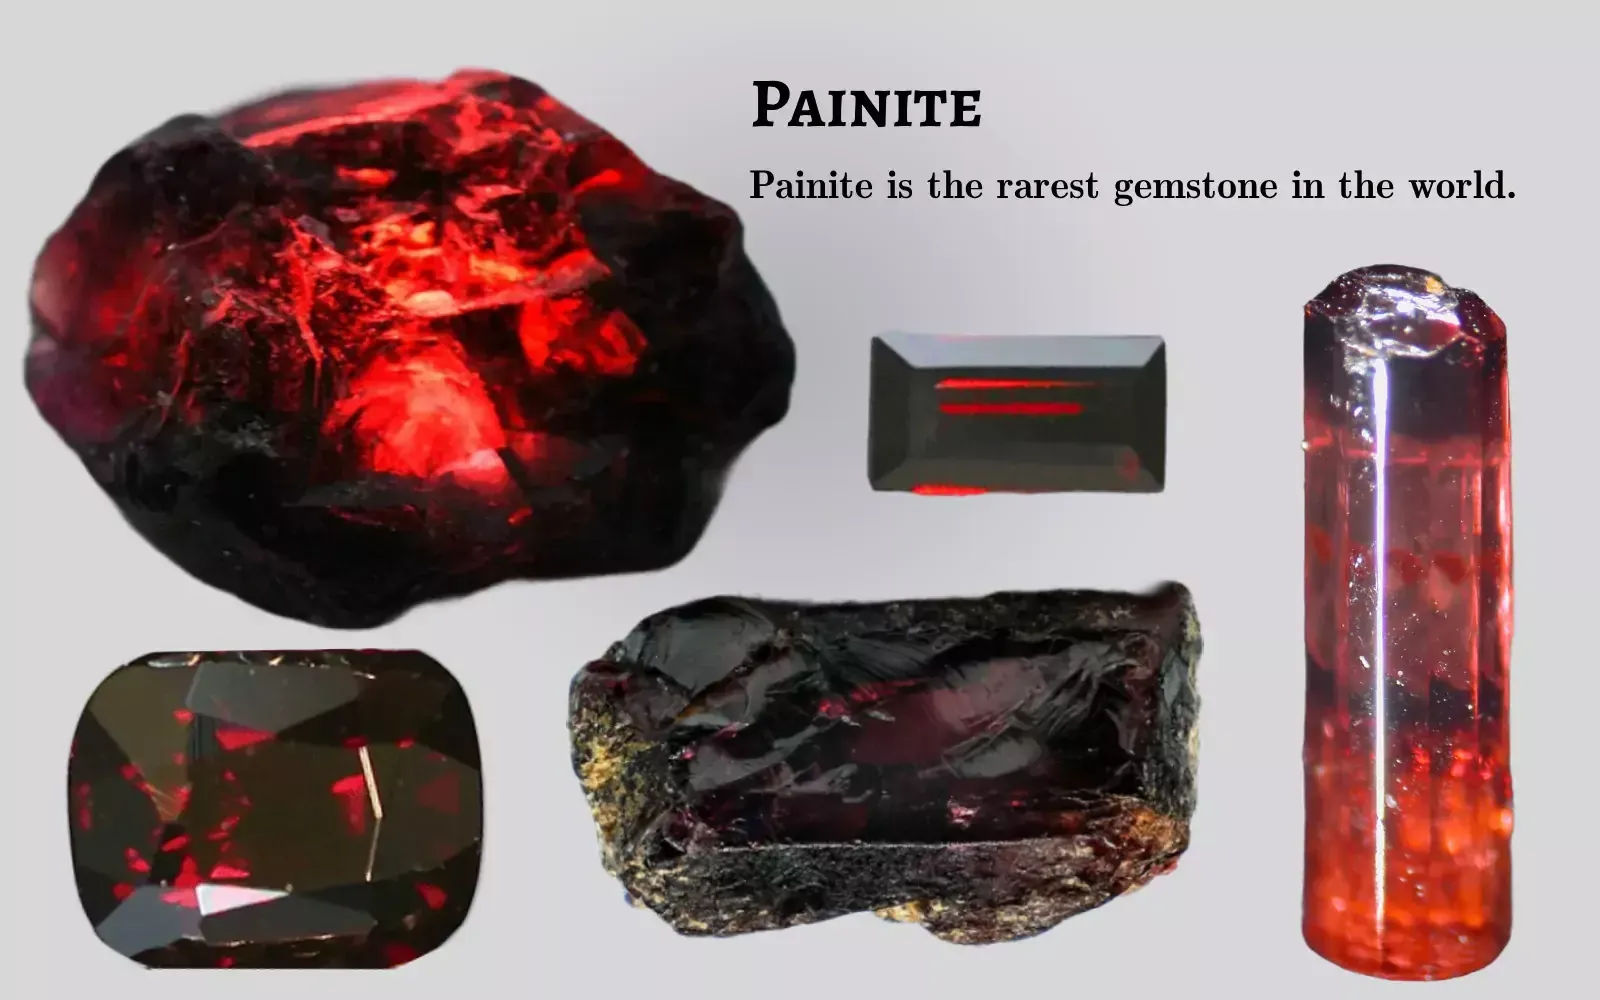 Painite: The Rarest Gem in the World